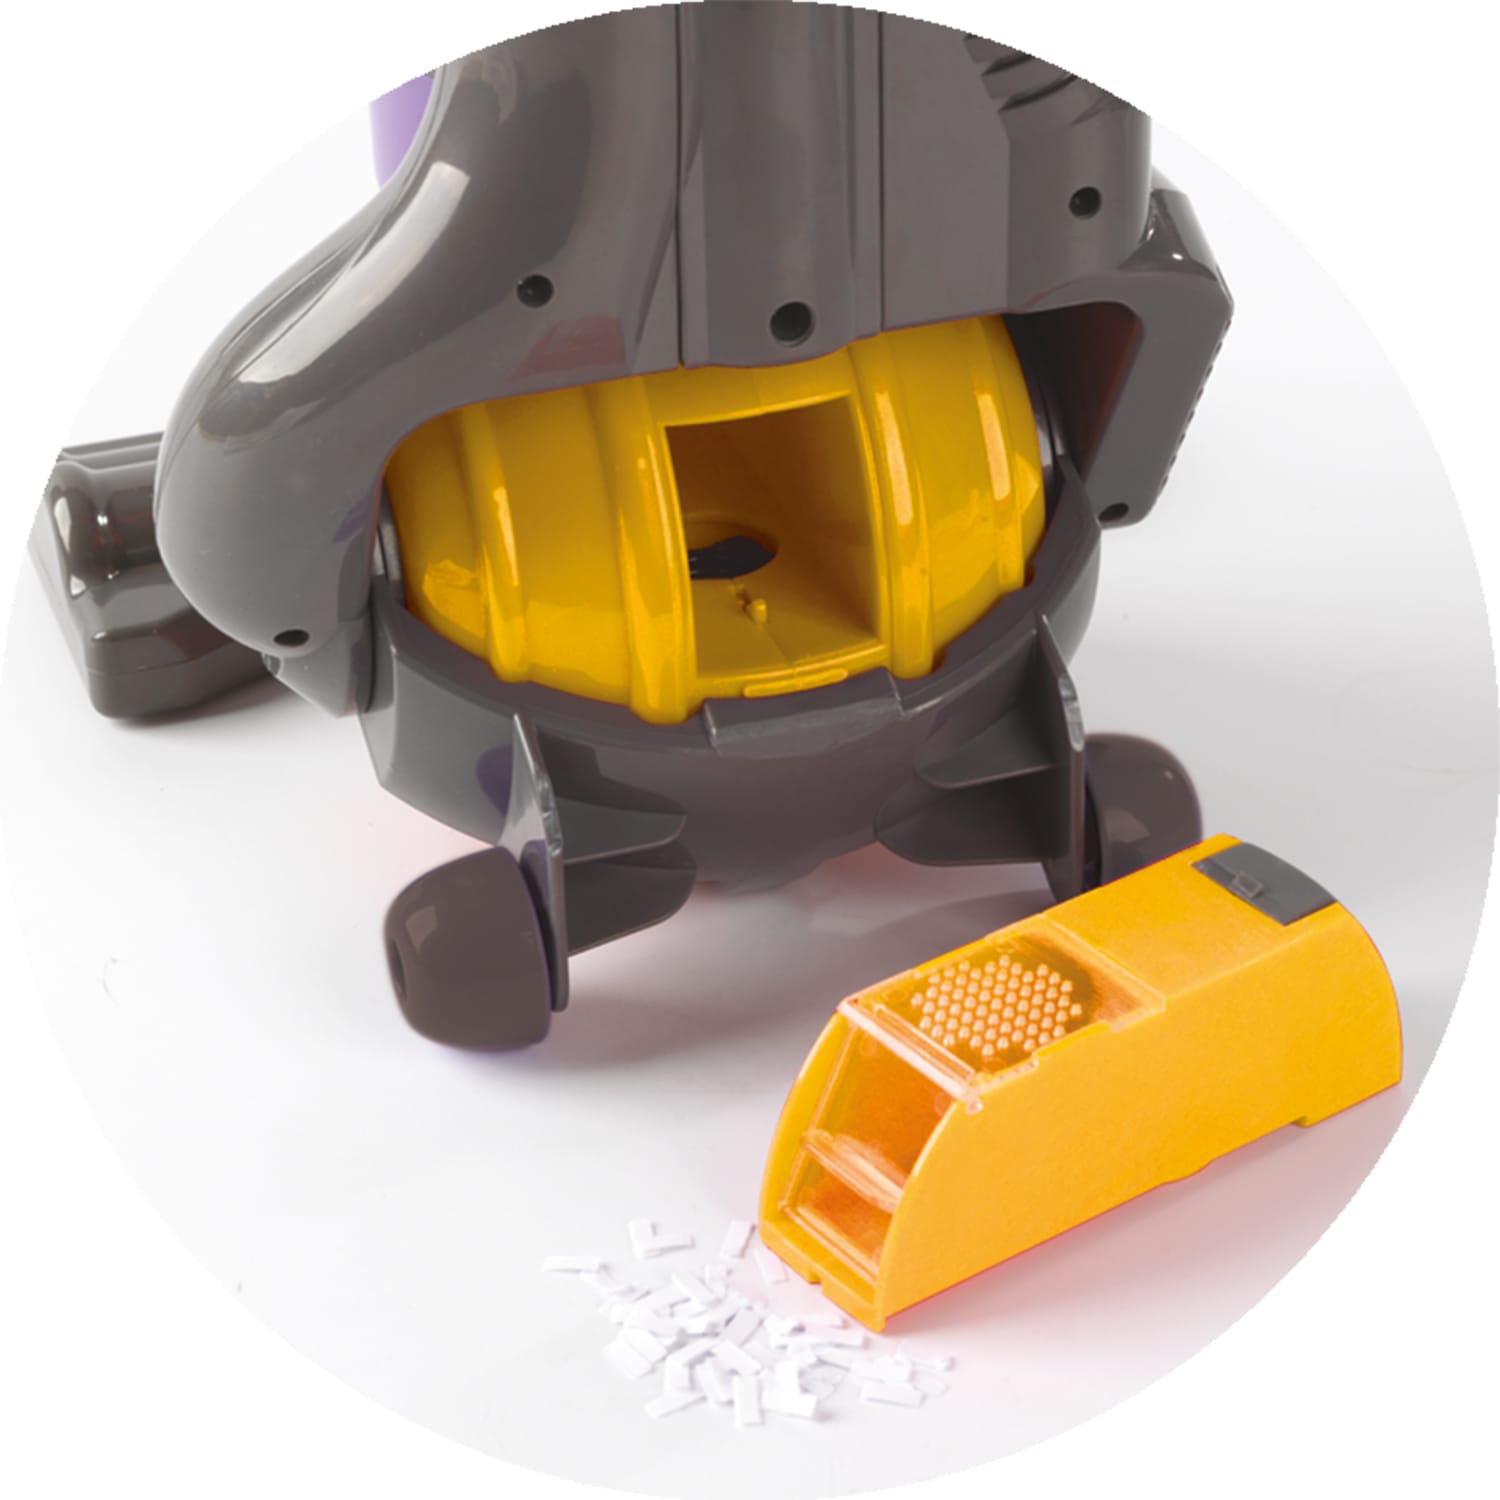 Casdon - Dyson Ball Vacuum Cleaner Toy